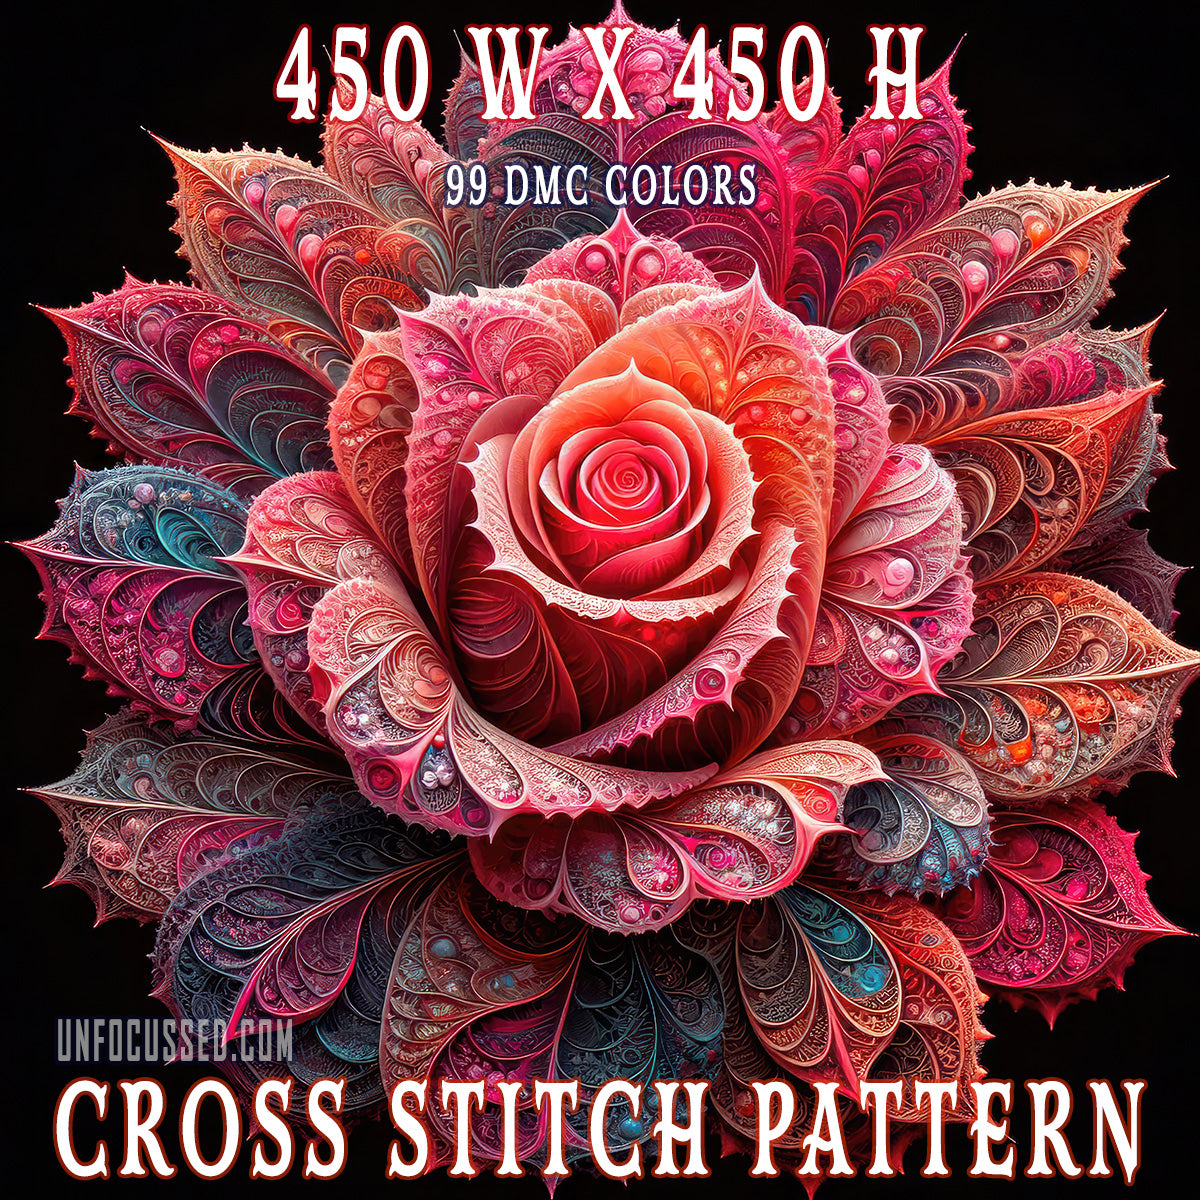 The Cosmic Bloom Cross Stitch Pattern